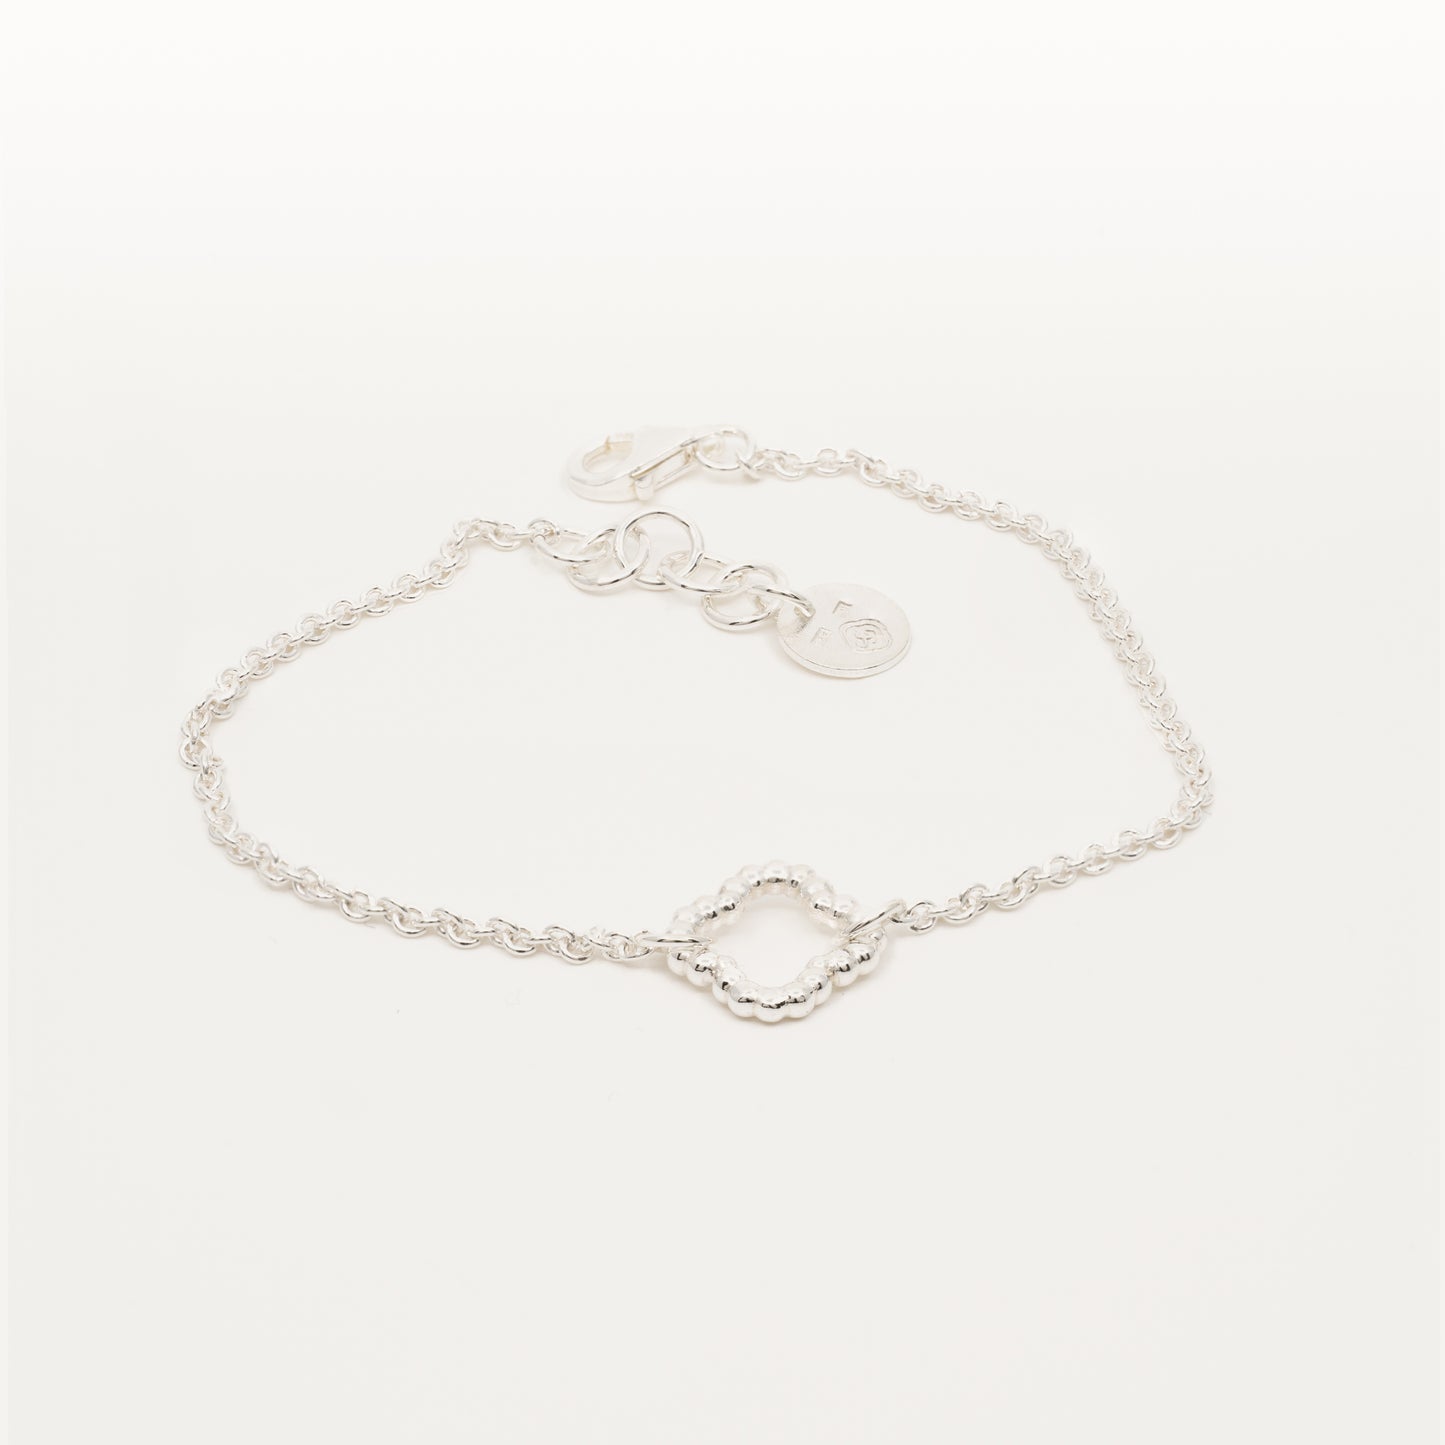 Creo Marbles - Silver bracelet